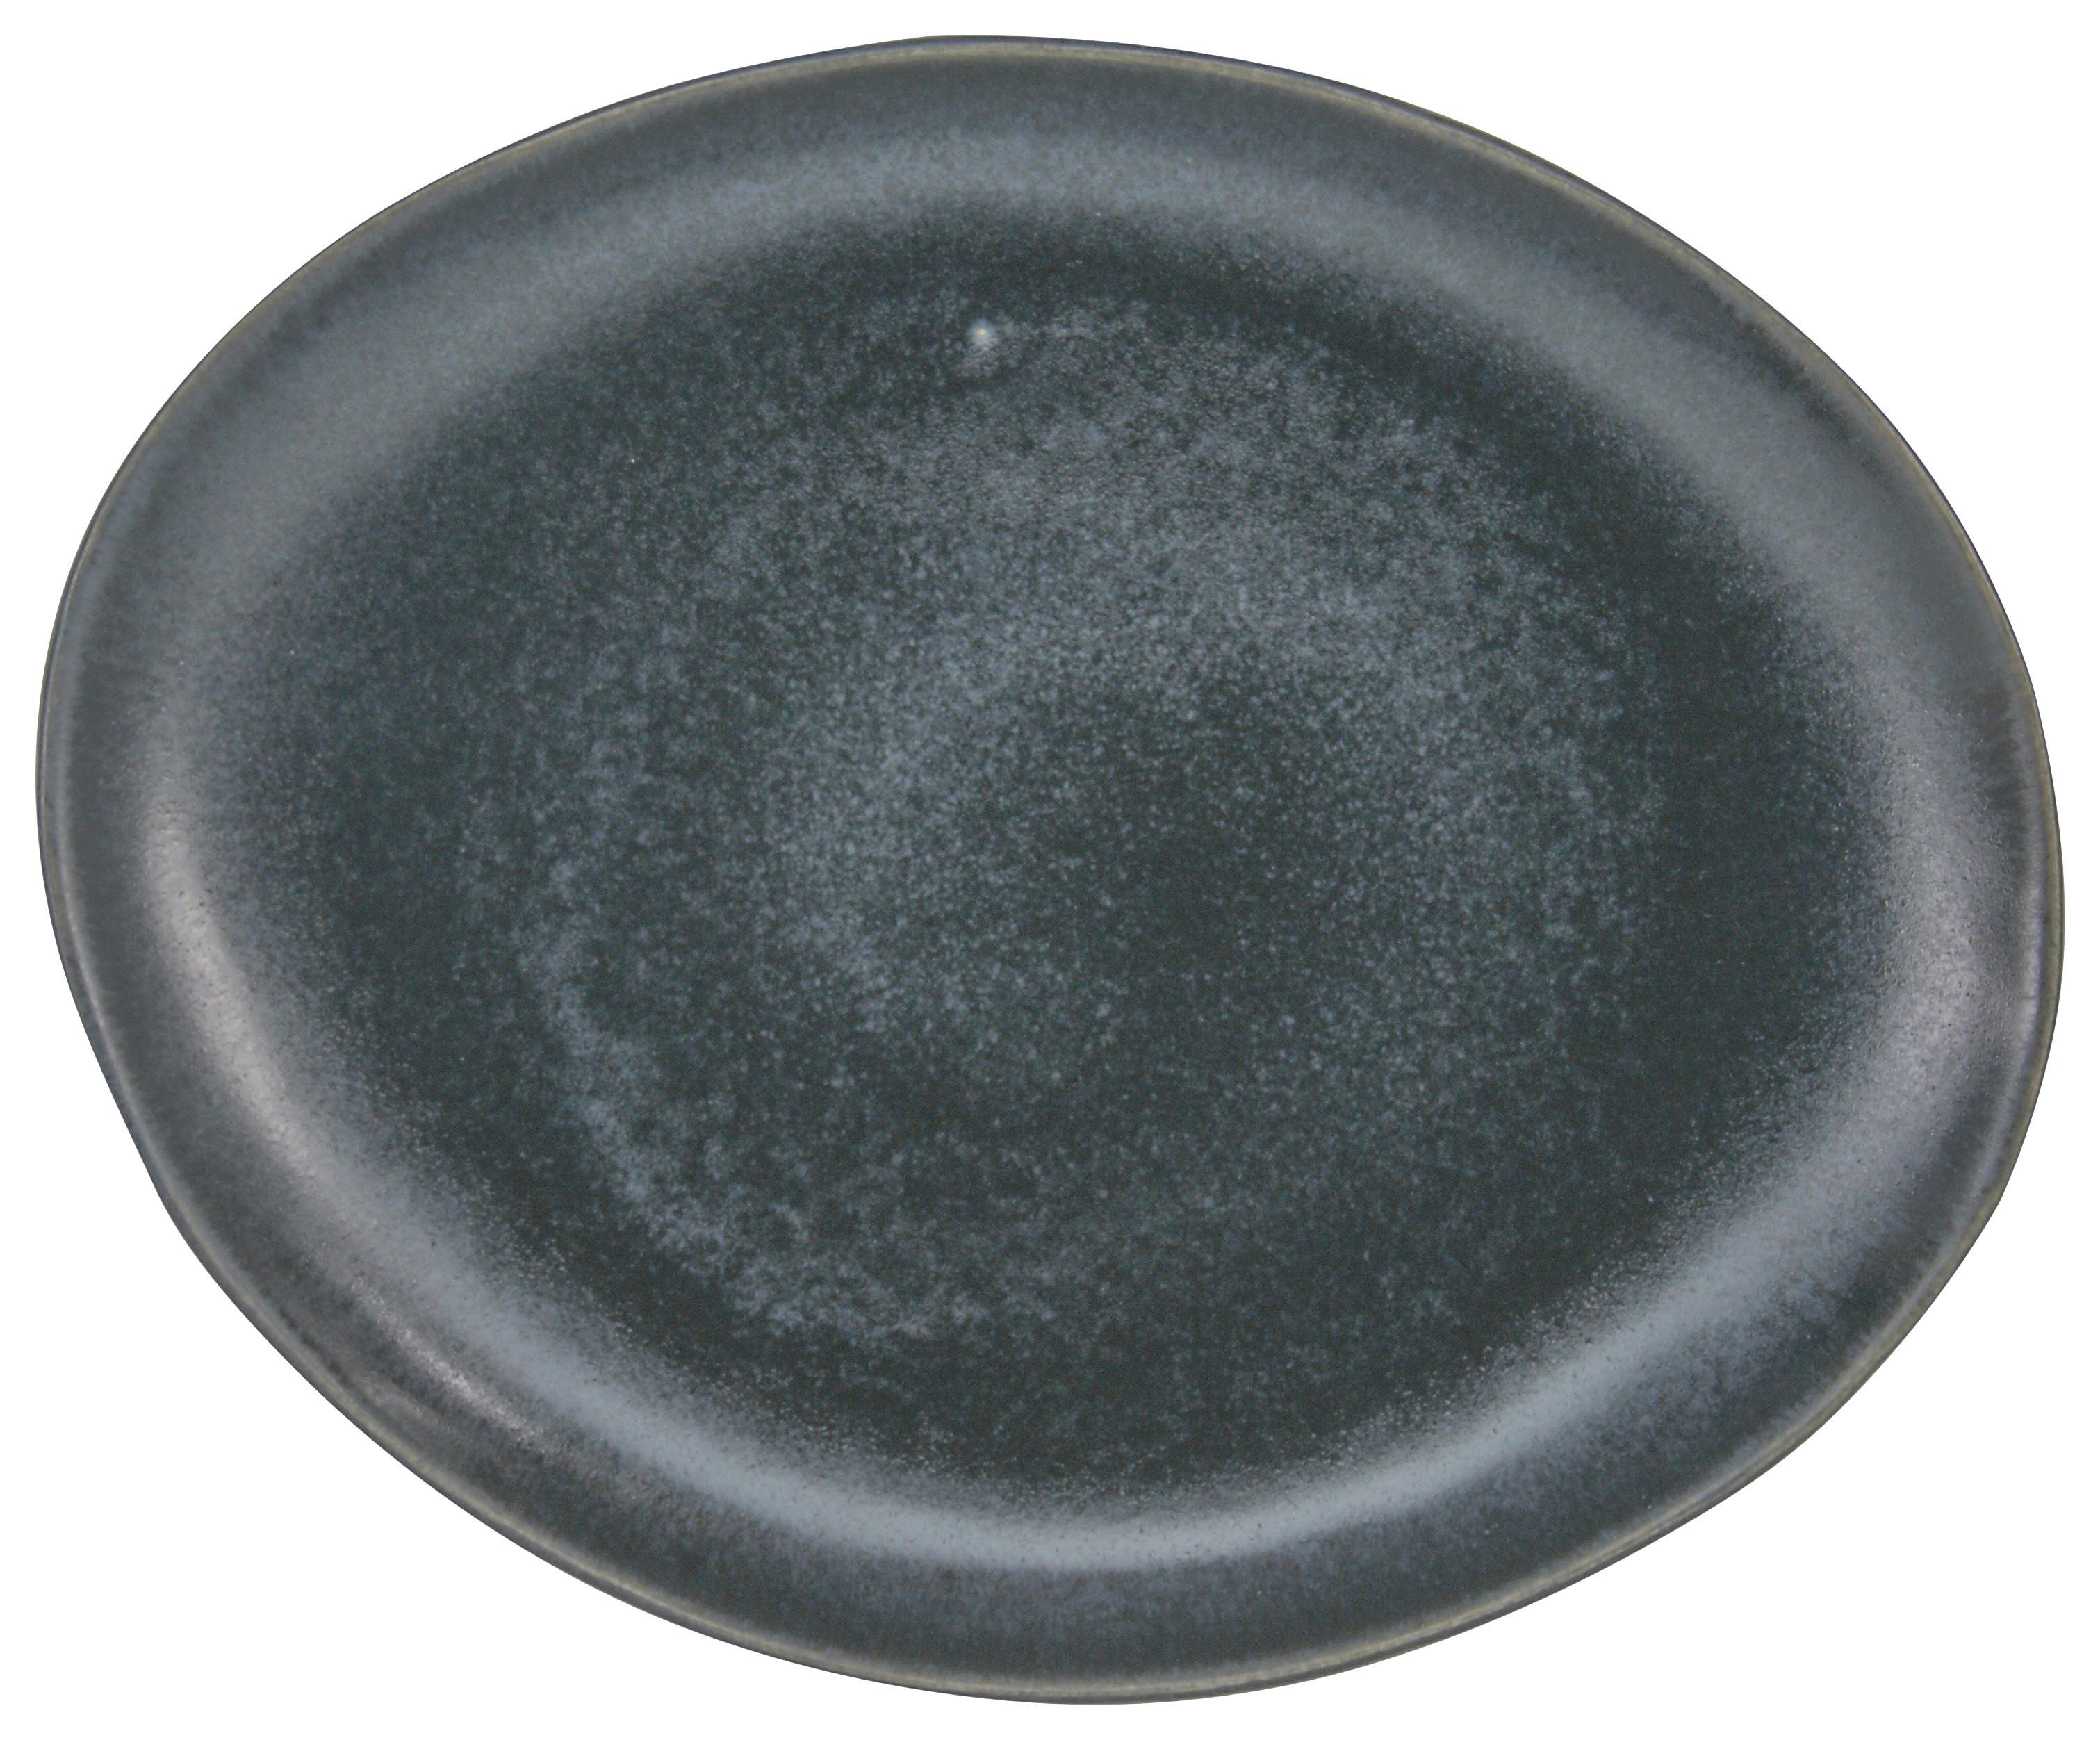 TALERZ OBIADOWY GOURMET - czarny, Modern, ceramika (27/20/3cm) - Premium Living